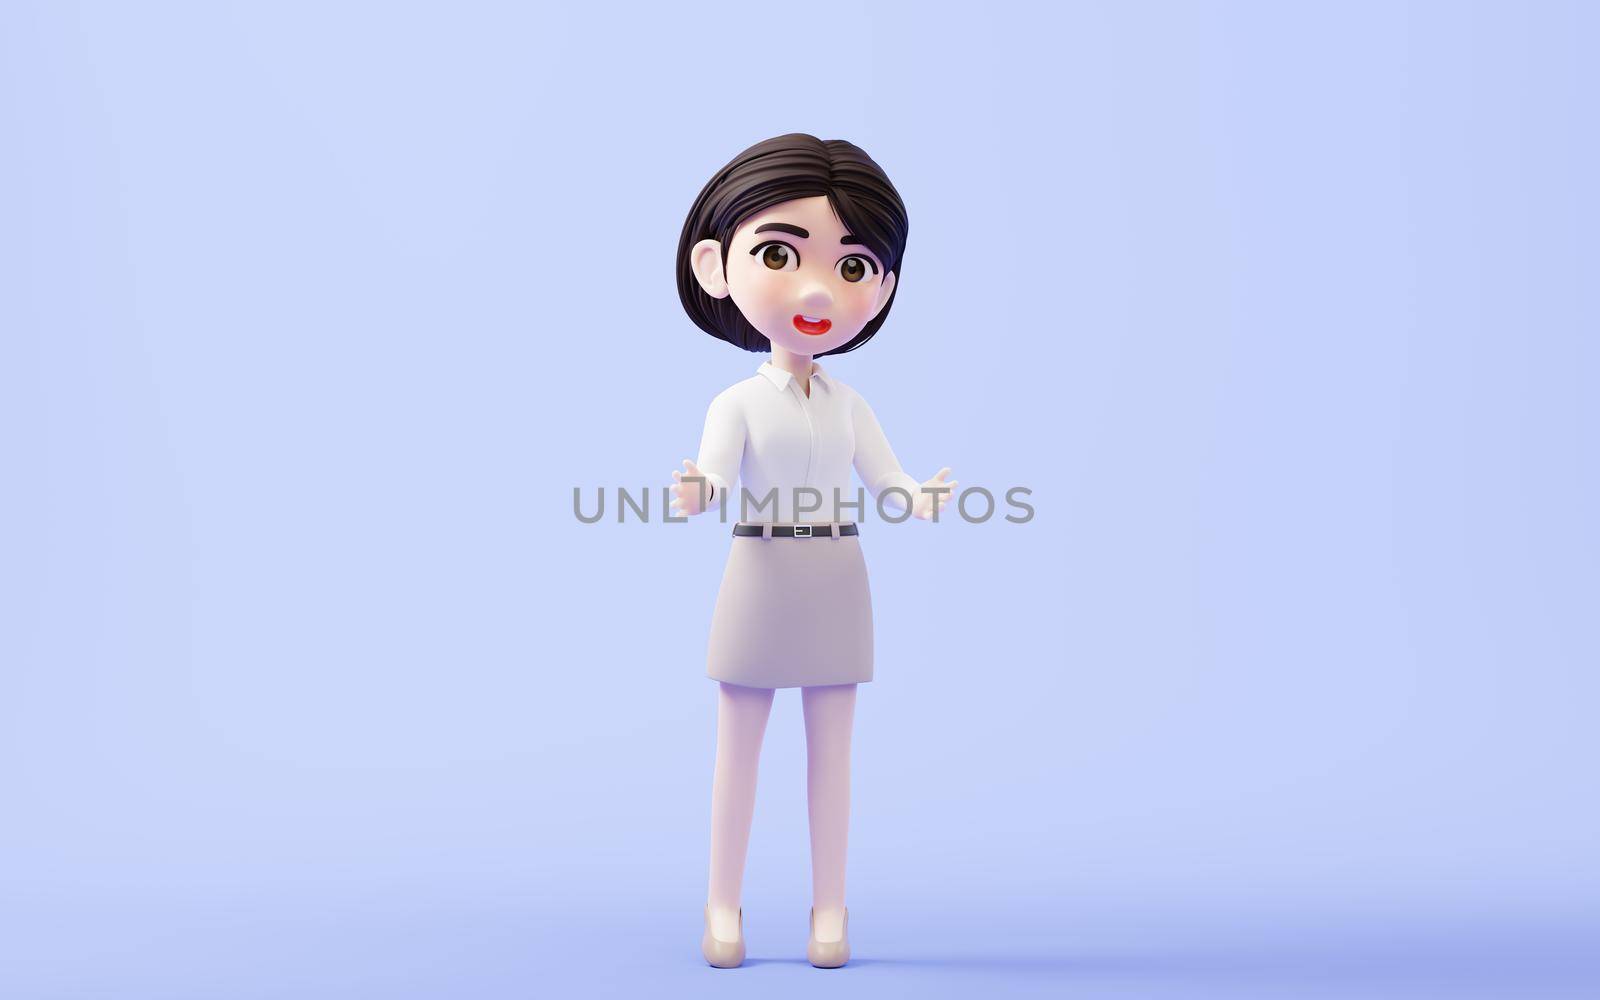 Cartoon girl with white shirt and khaki skirt, 3d rendering. Computer digital drawing.